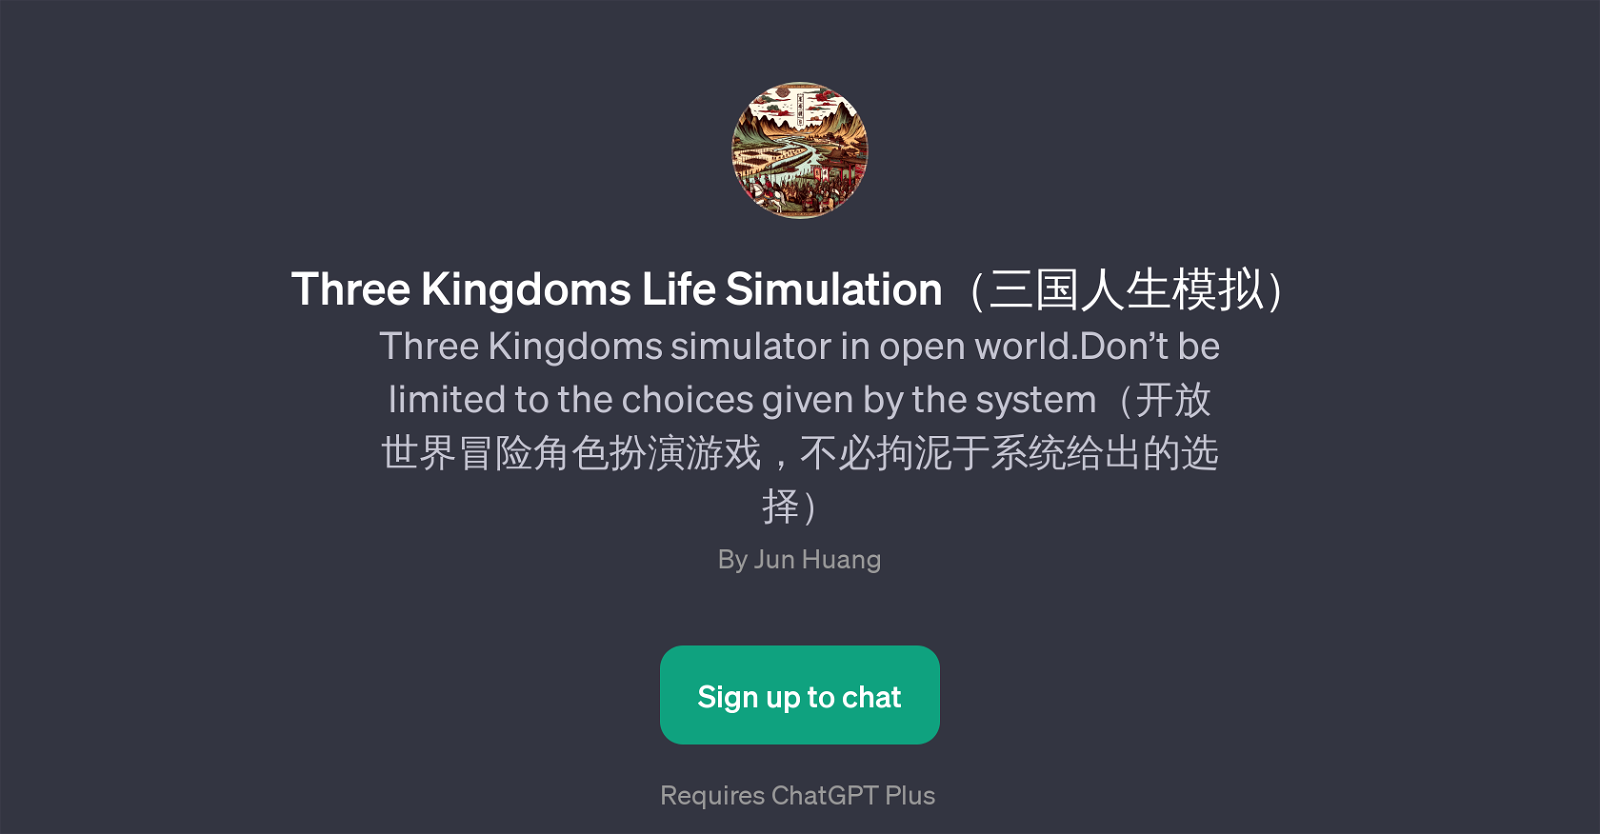 Three Kingdoms Life Simulation website